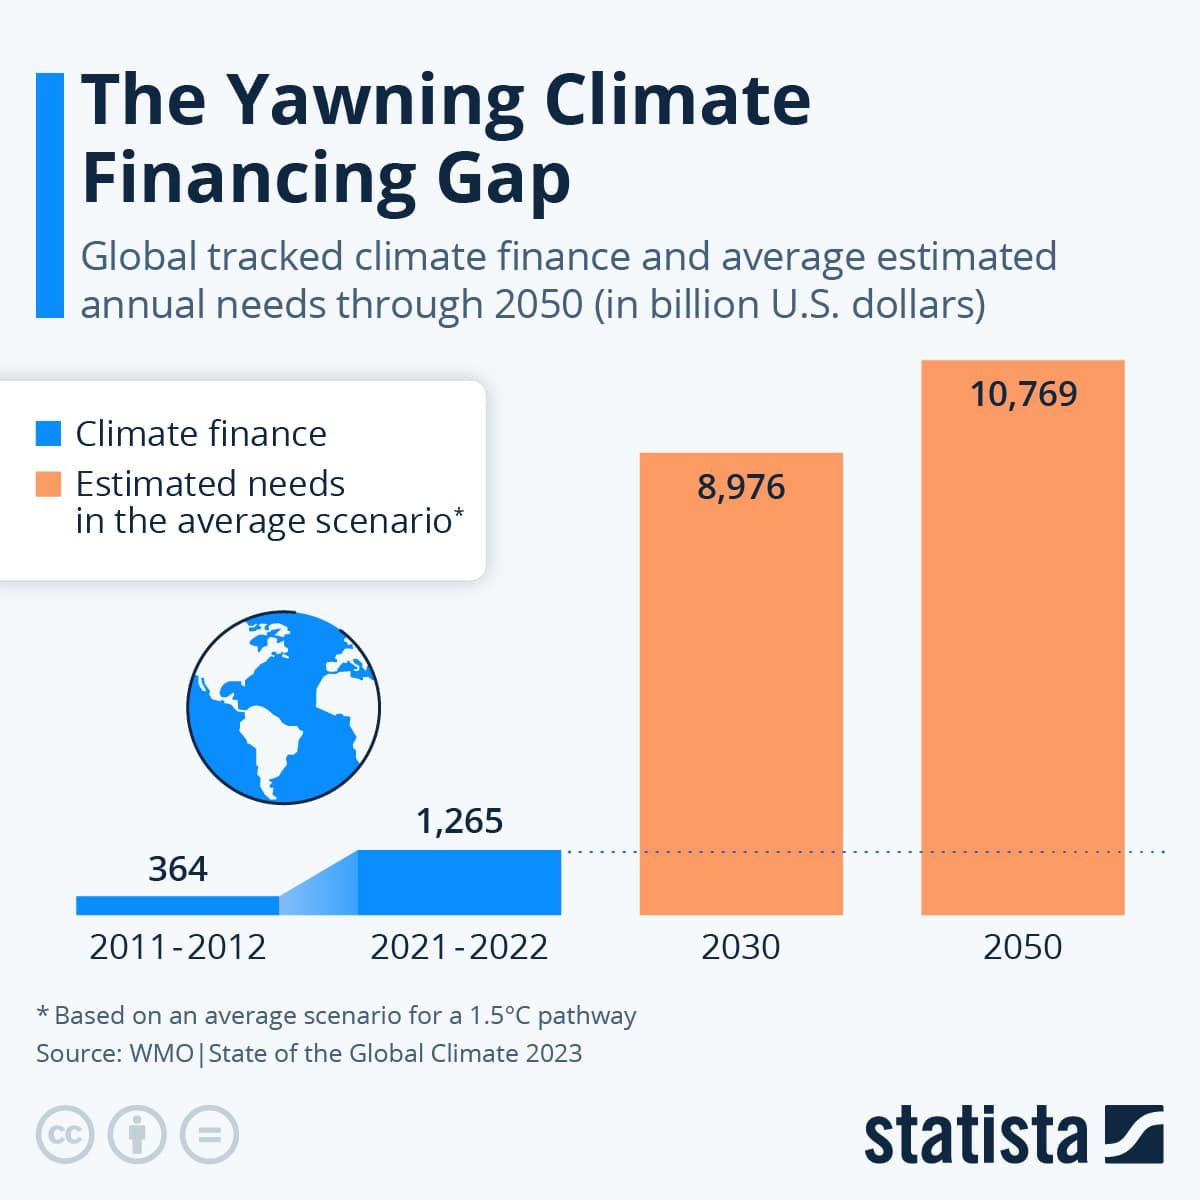 climate financing gap 2030 - 2050